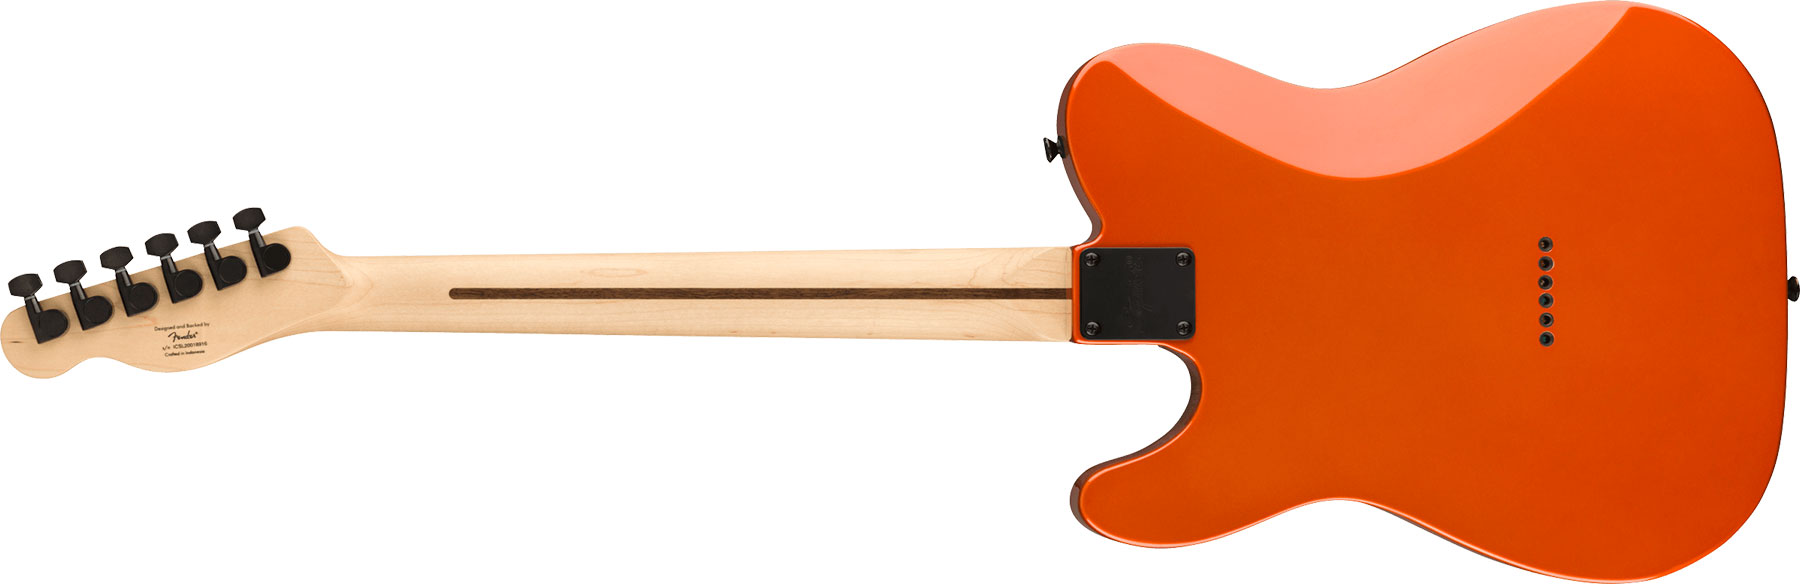 Squier Tele Affinity Hh Fsr 2h Ht Lau - Metallic Orange - Guitarra eléctrica con forma de tel - Variation 1